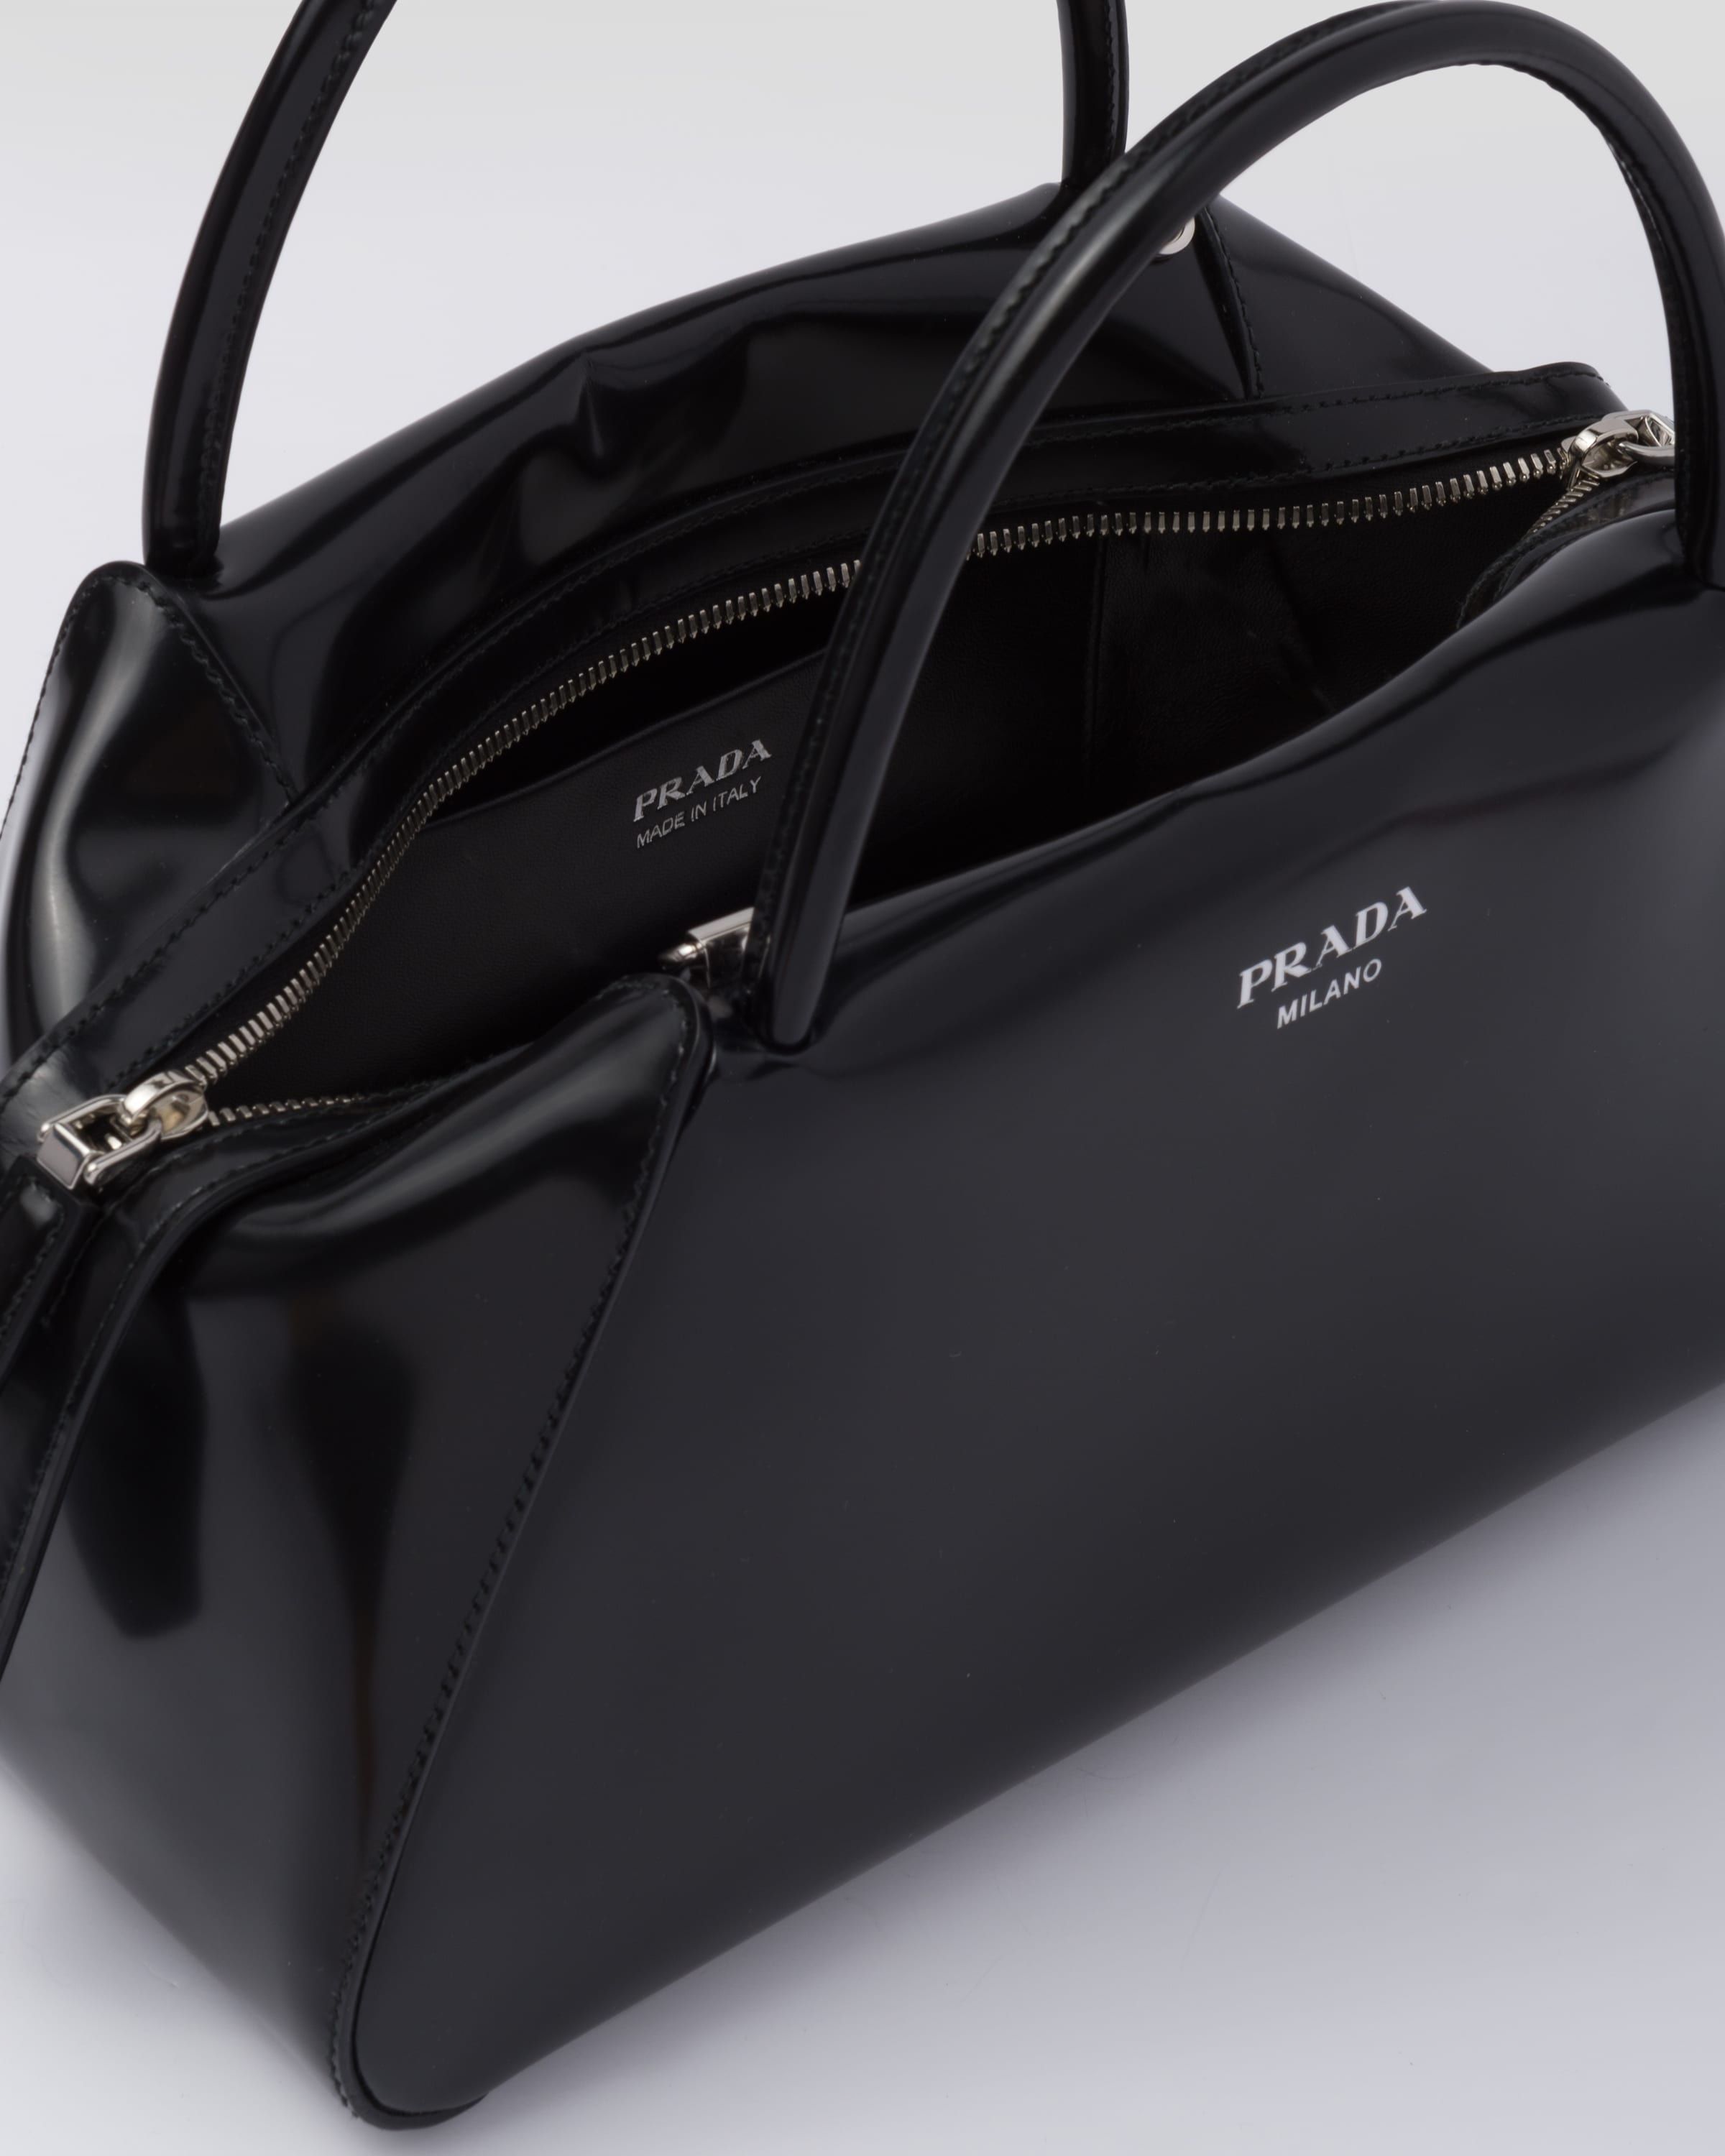 Medium brushed leather Prada Supernova handbag - 5